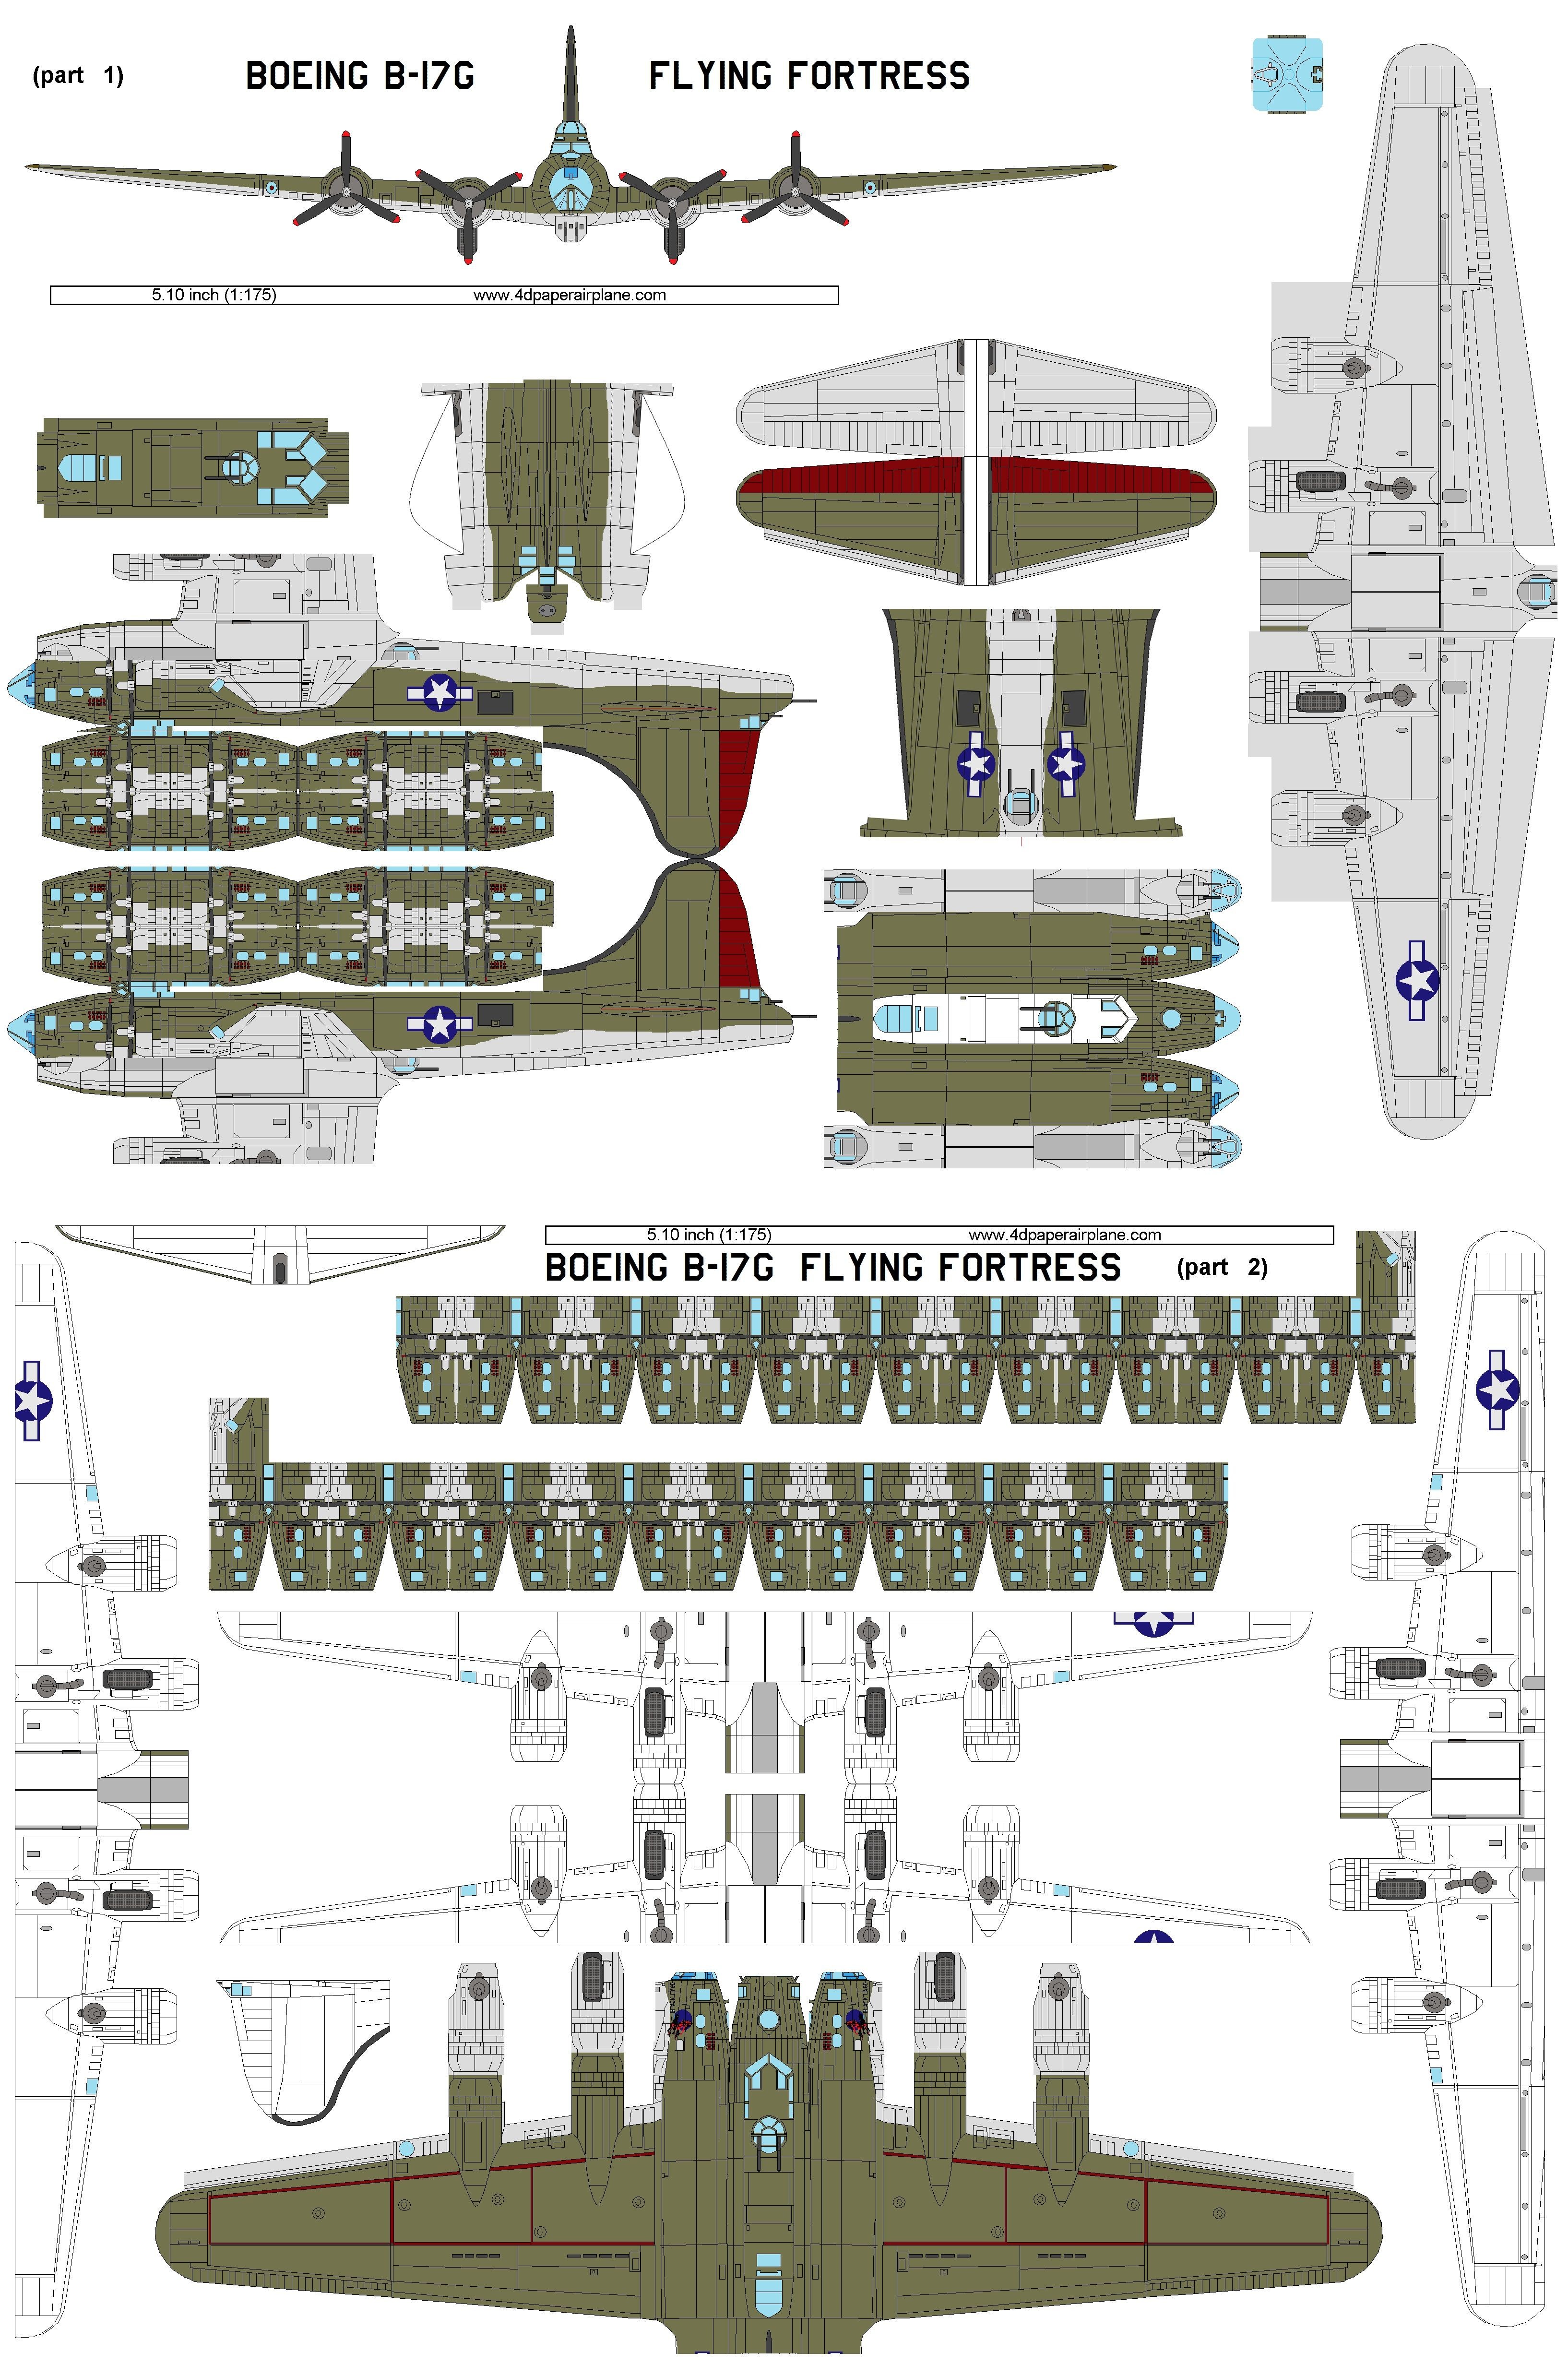 pfpx aircraft templates